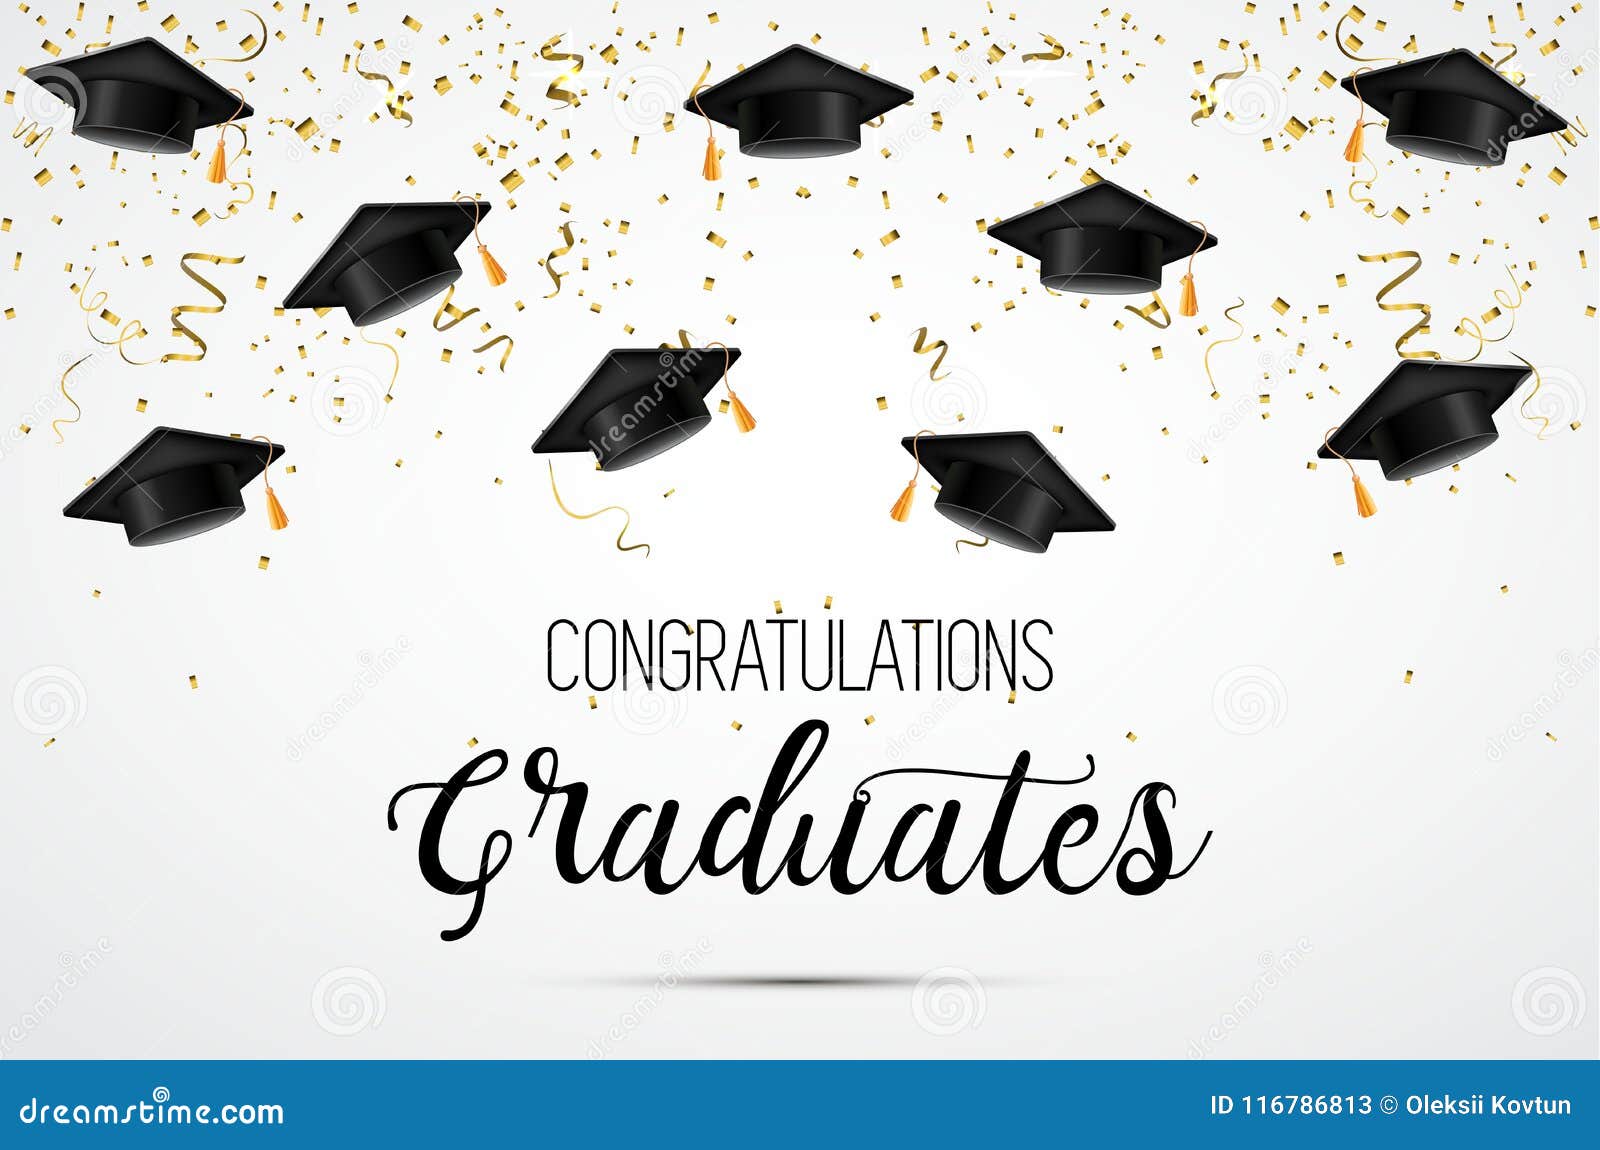 graduation class of 2018. congratulations graduates. academic hats, confetti and balloons. celebration. .